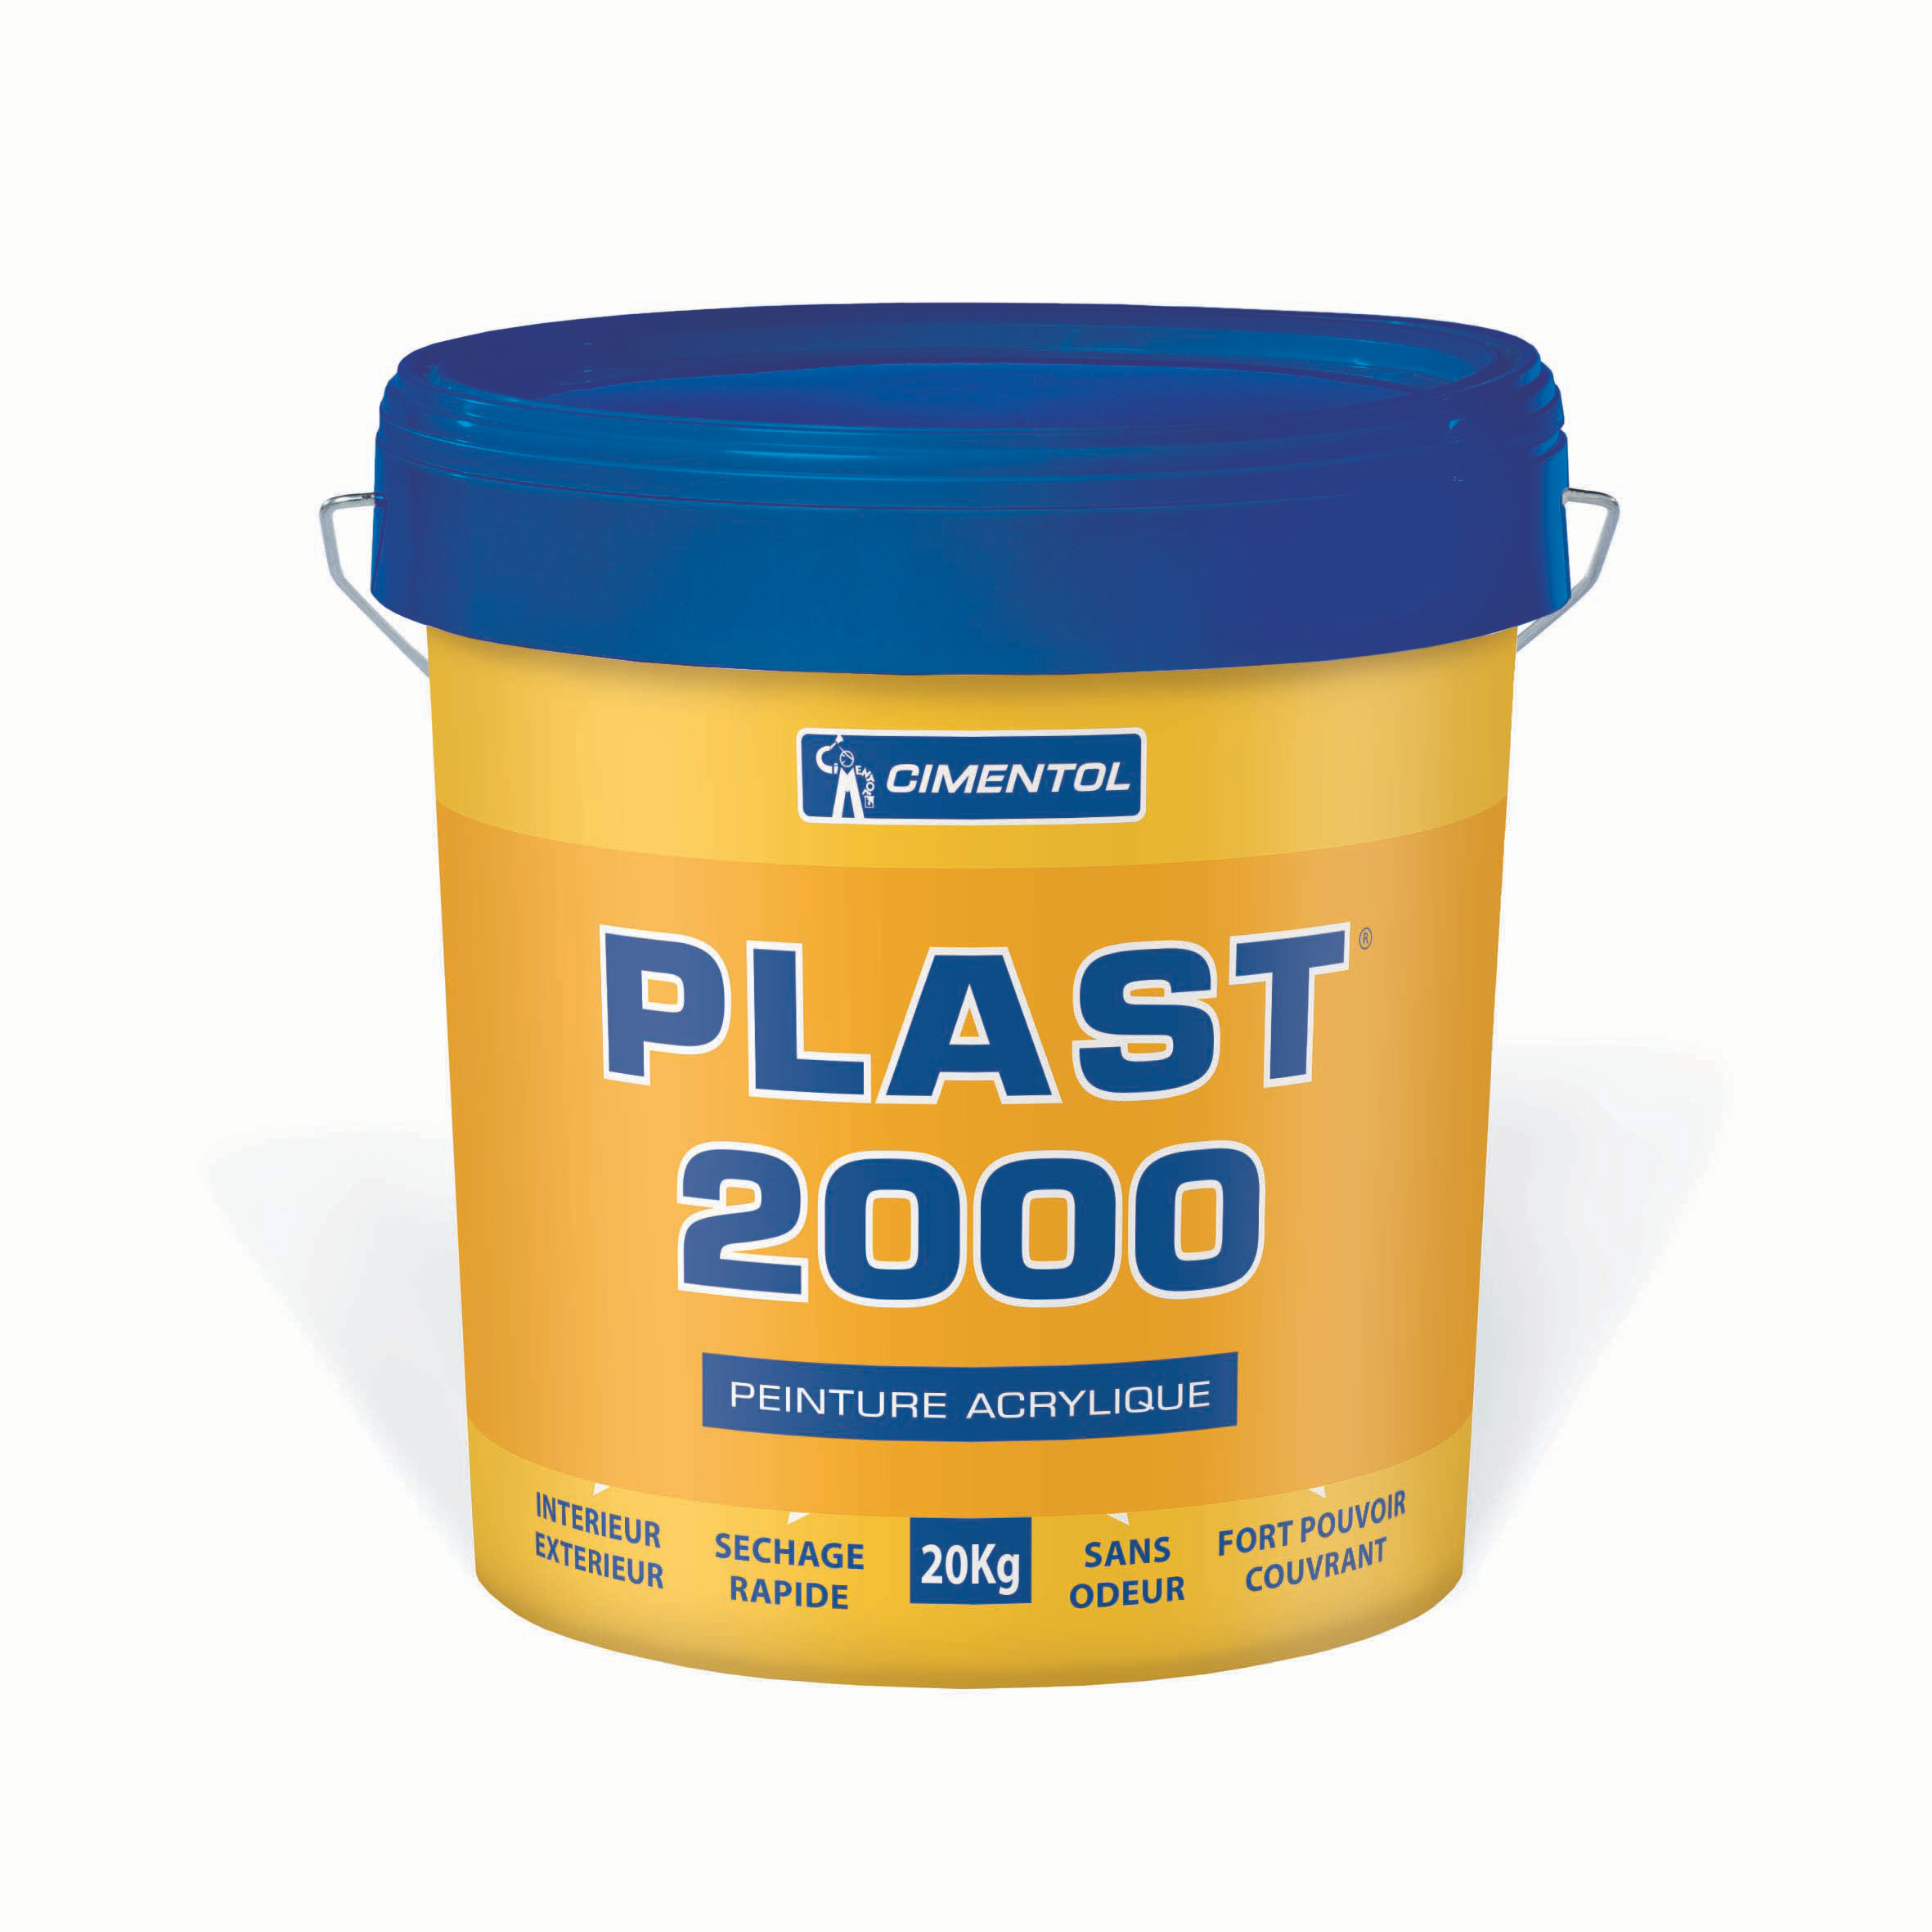 PLAST 2000